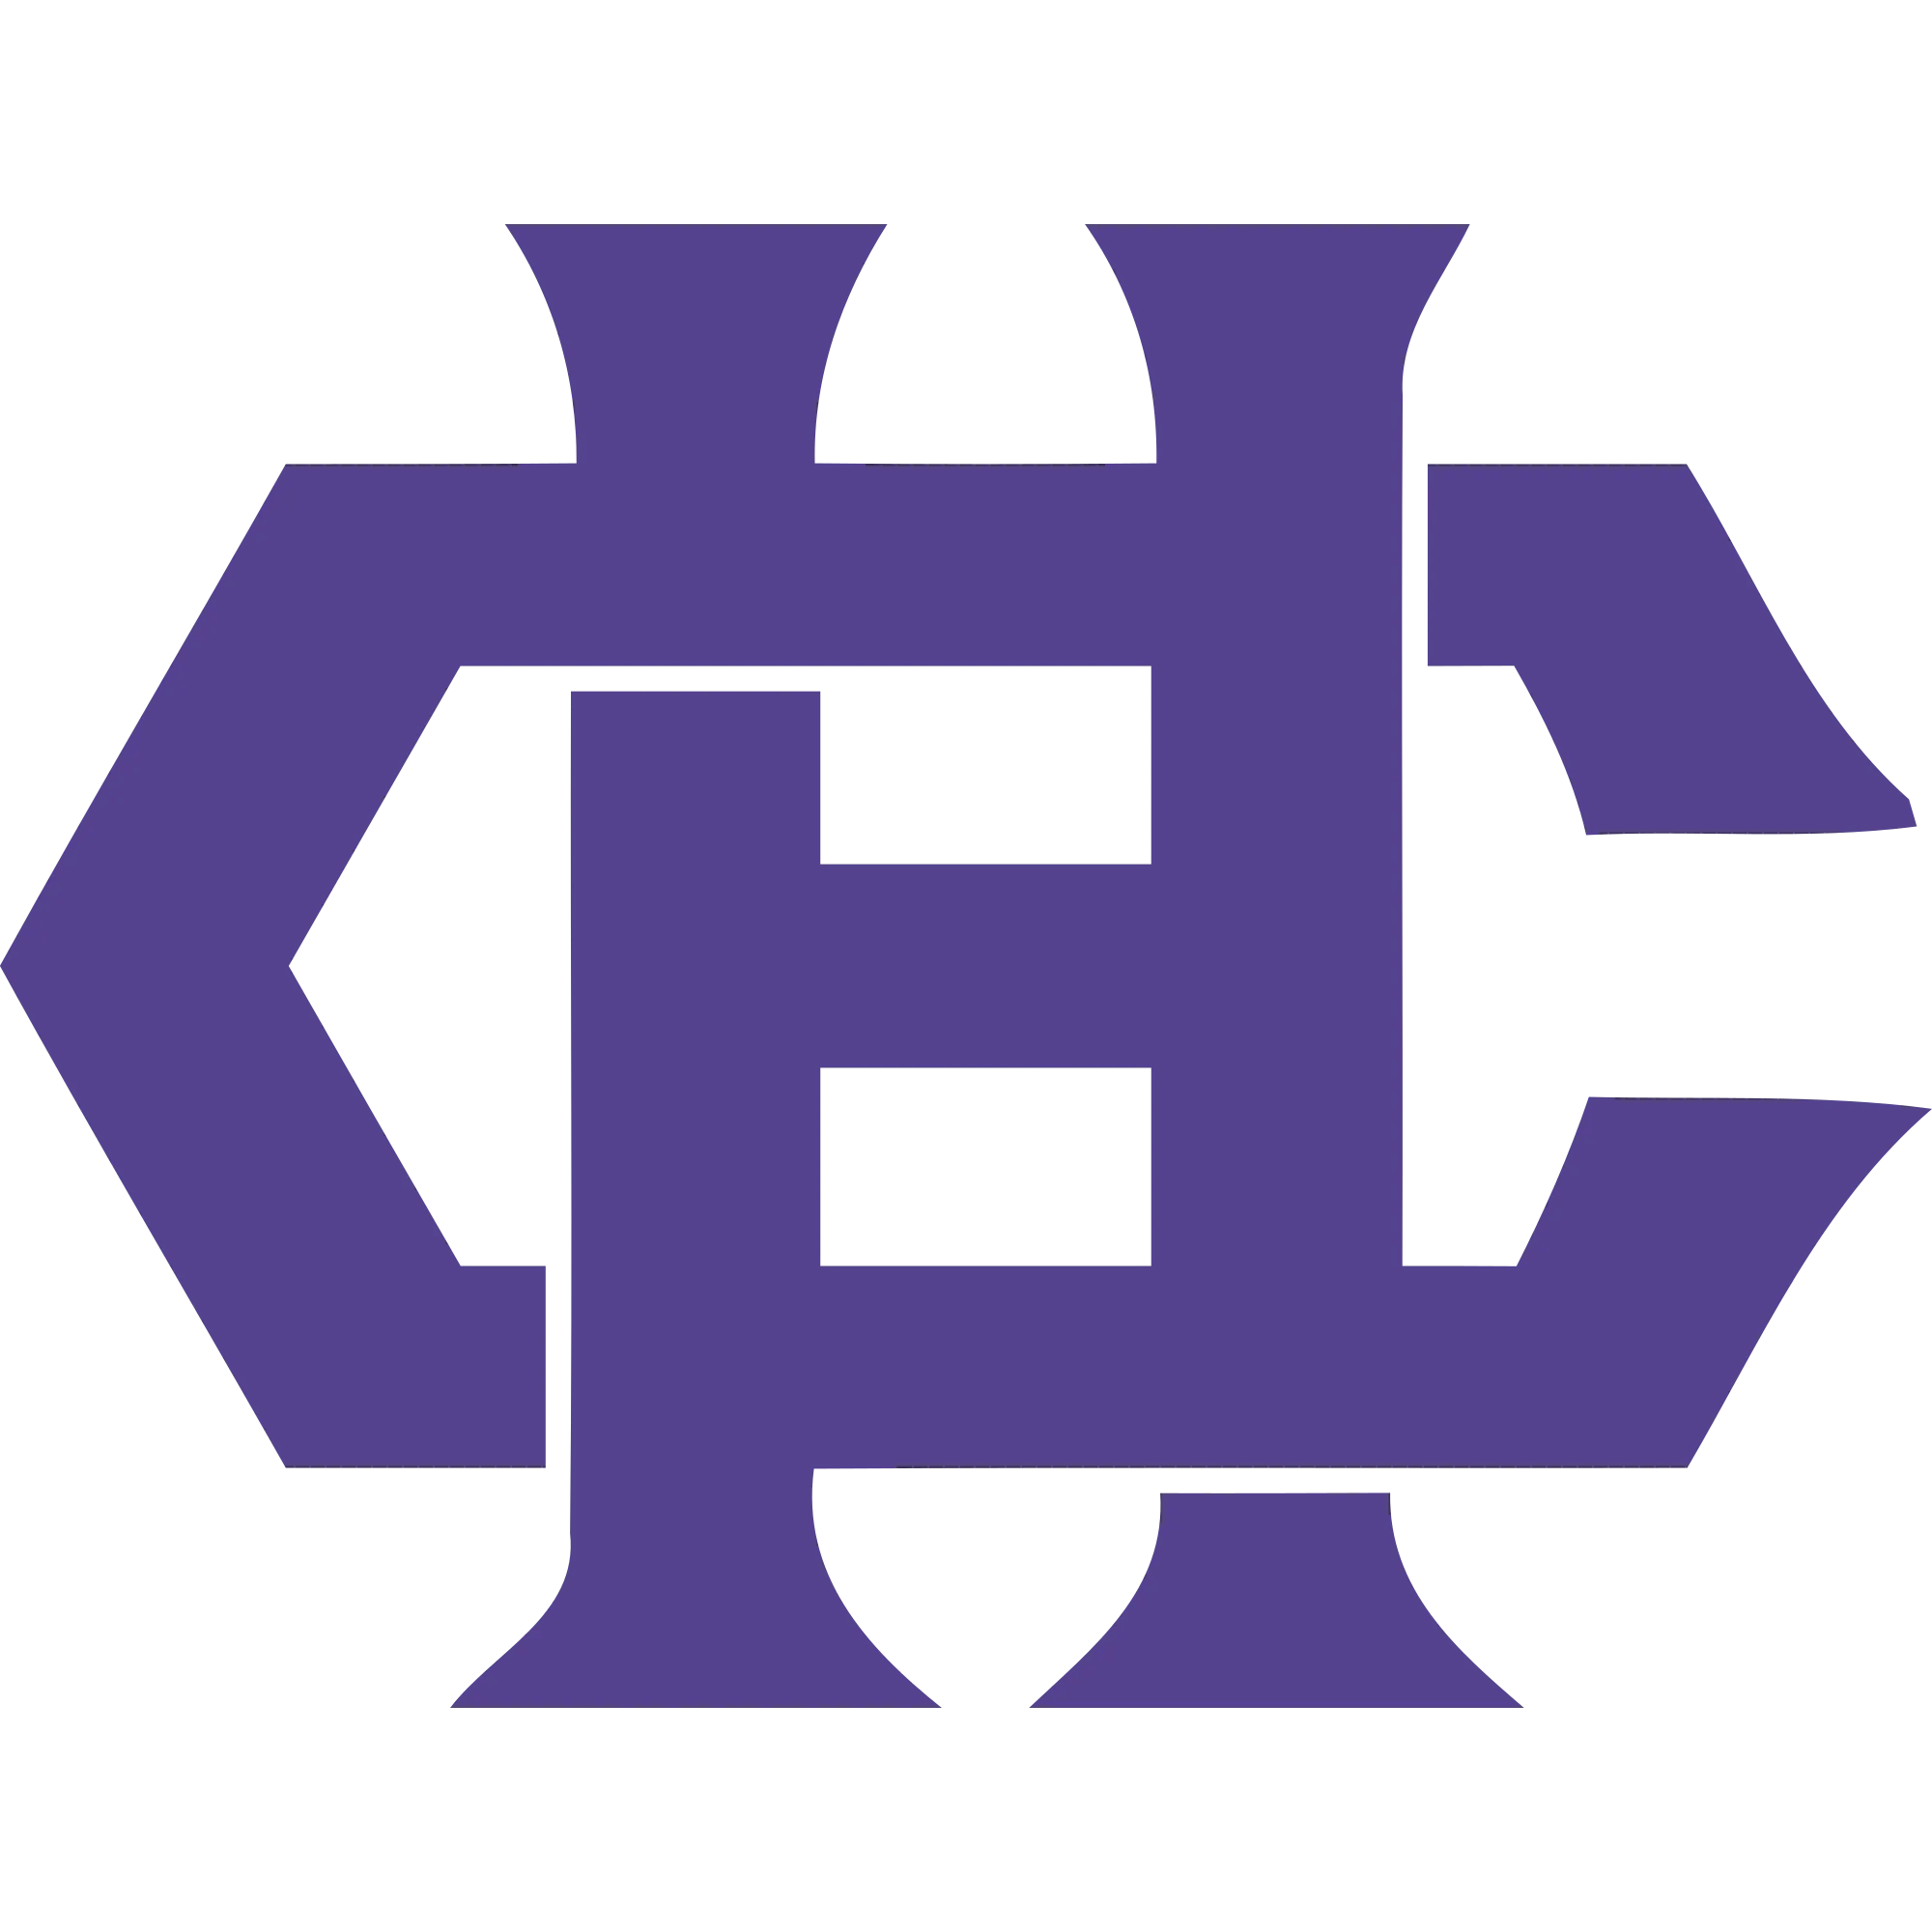 HyperCash logo in png format